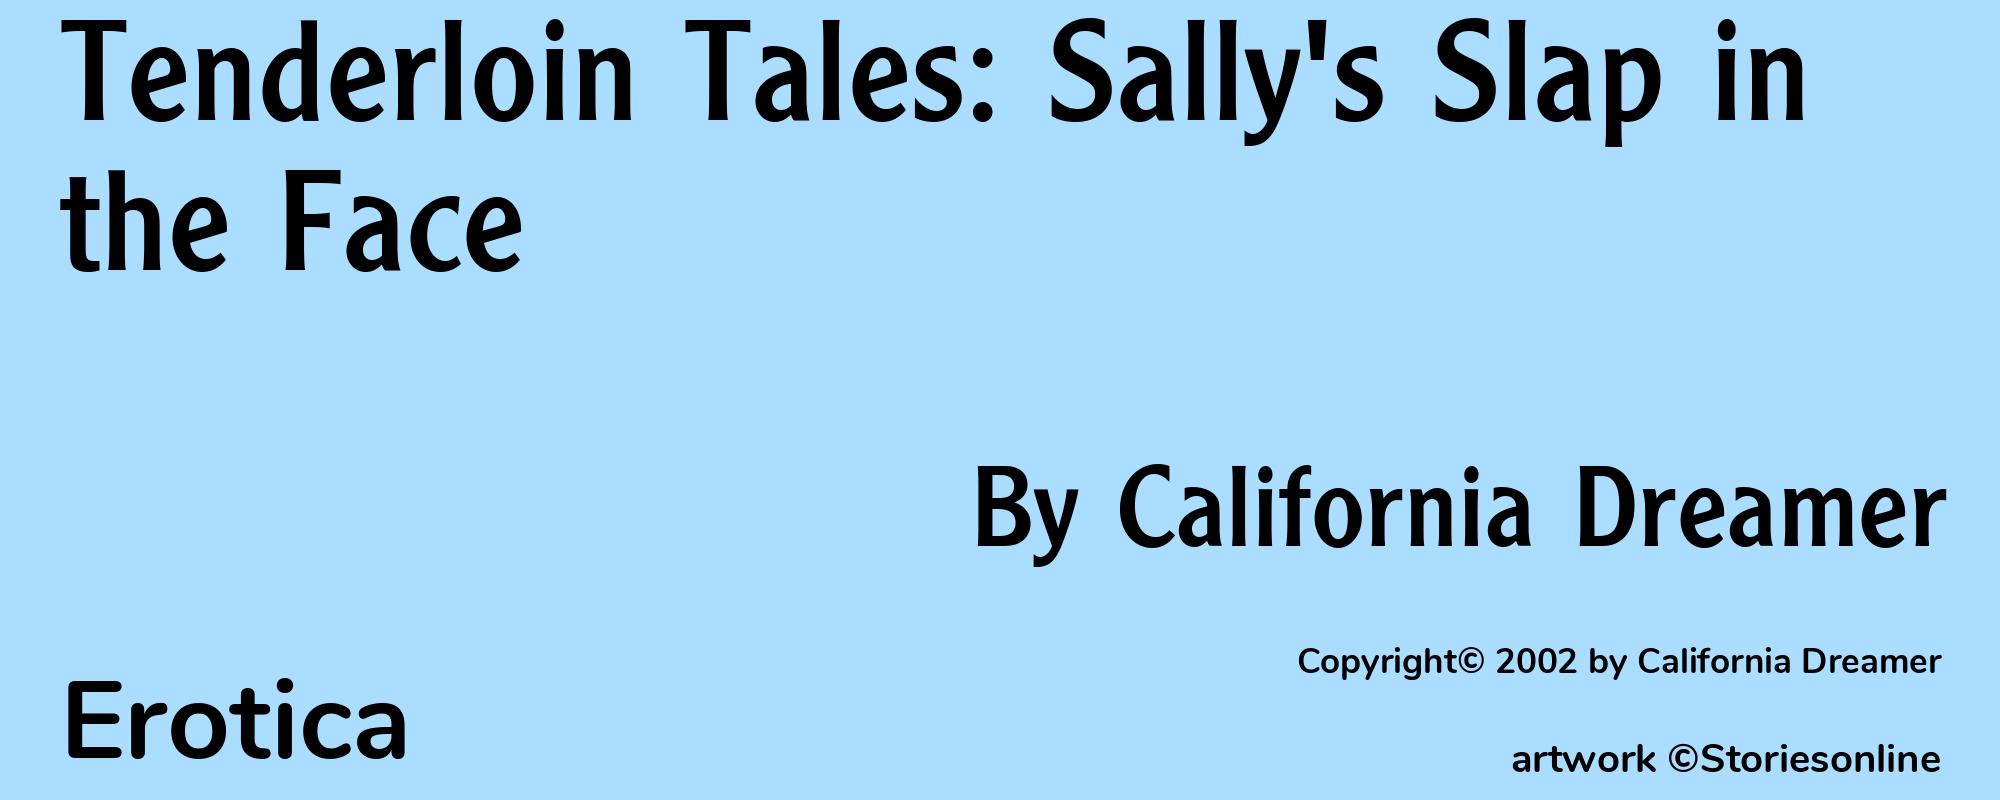 Tenderloin Tales: Sally's Slap in the Face - Cover